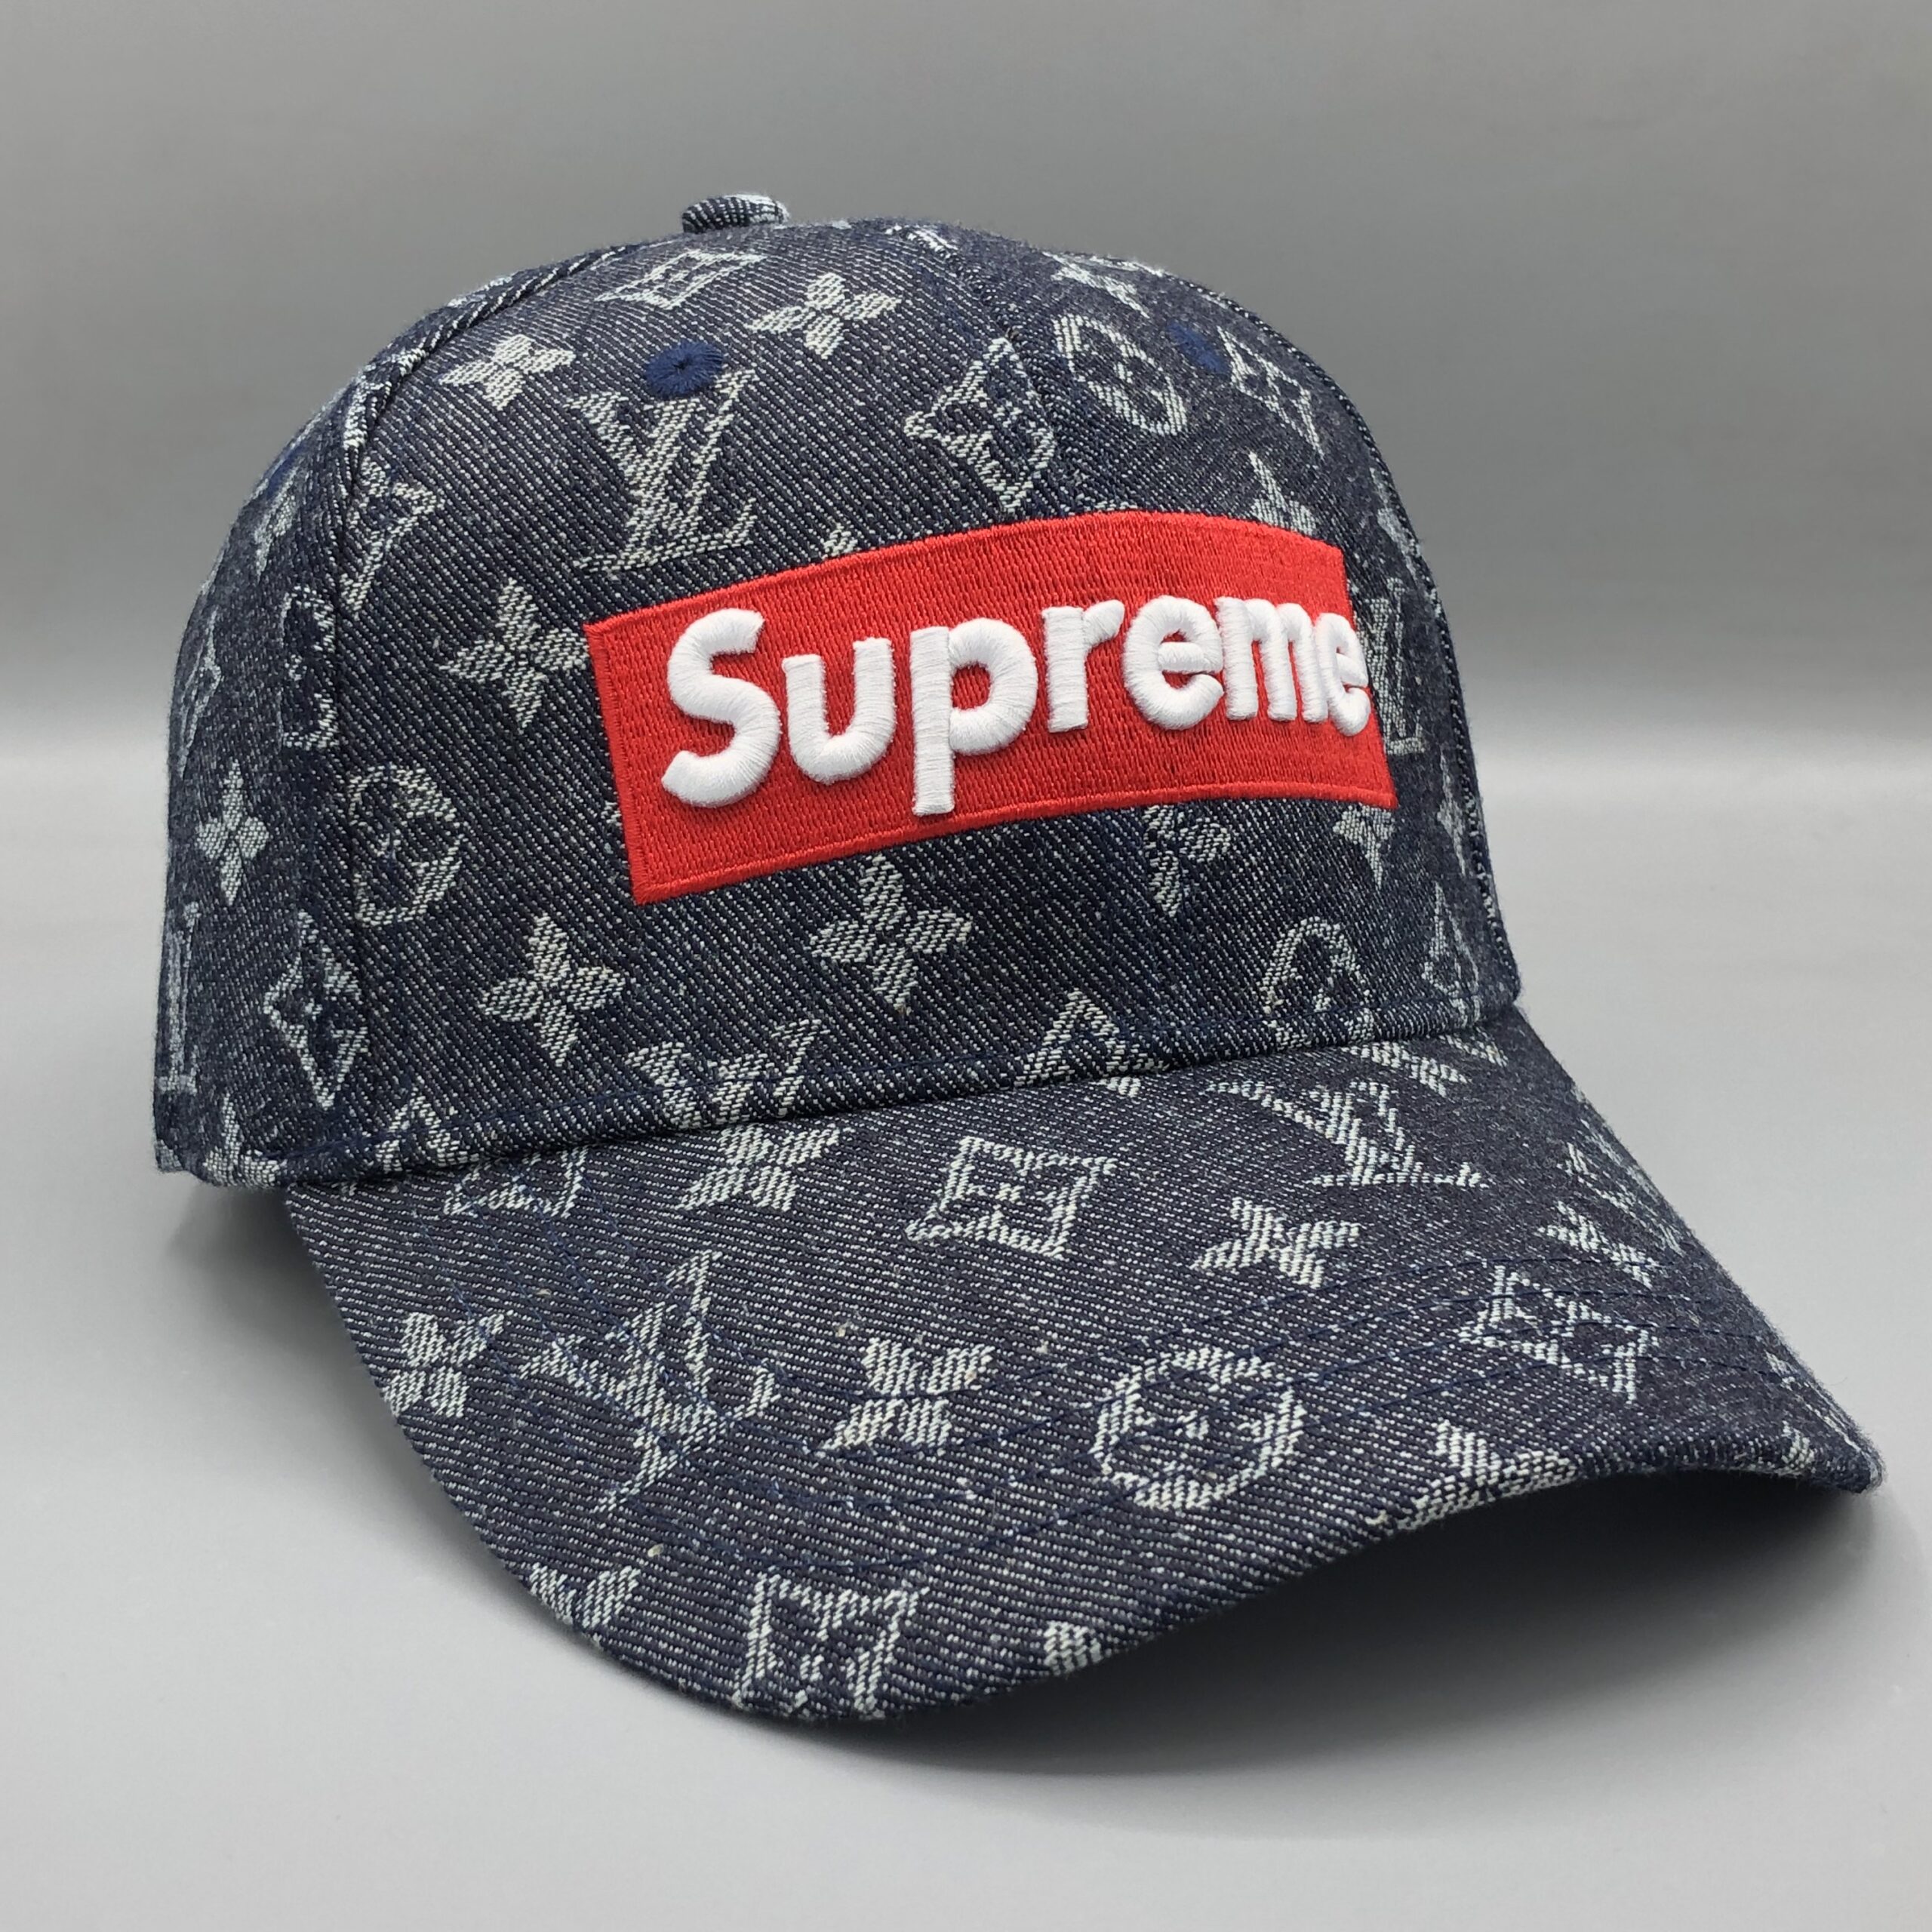 real supreme lv hat